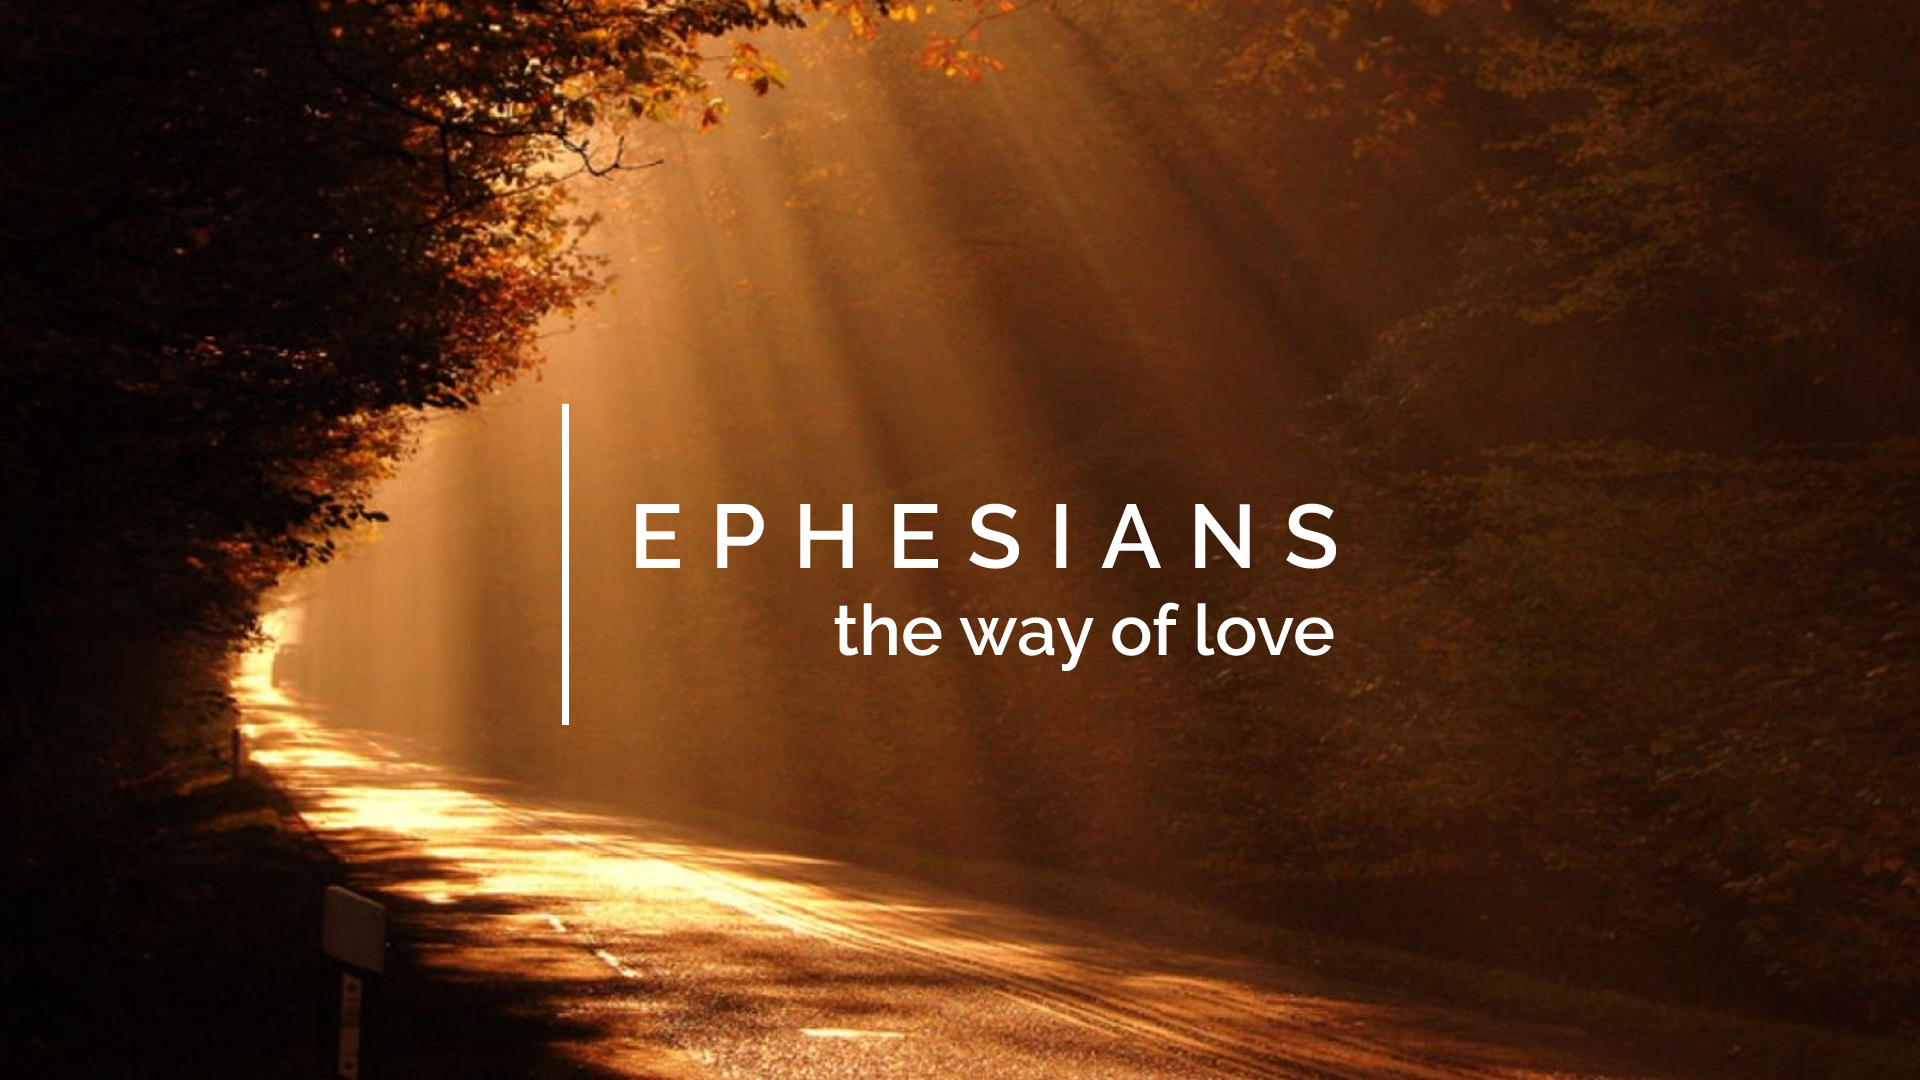 EPHESIANS | The Way of Love